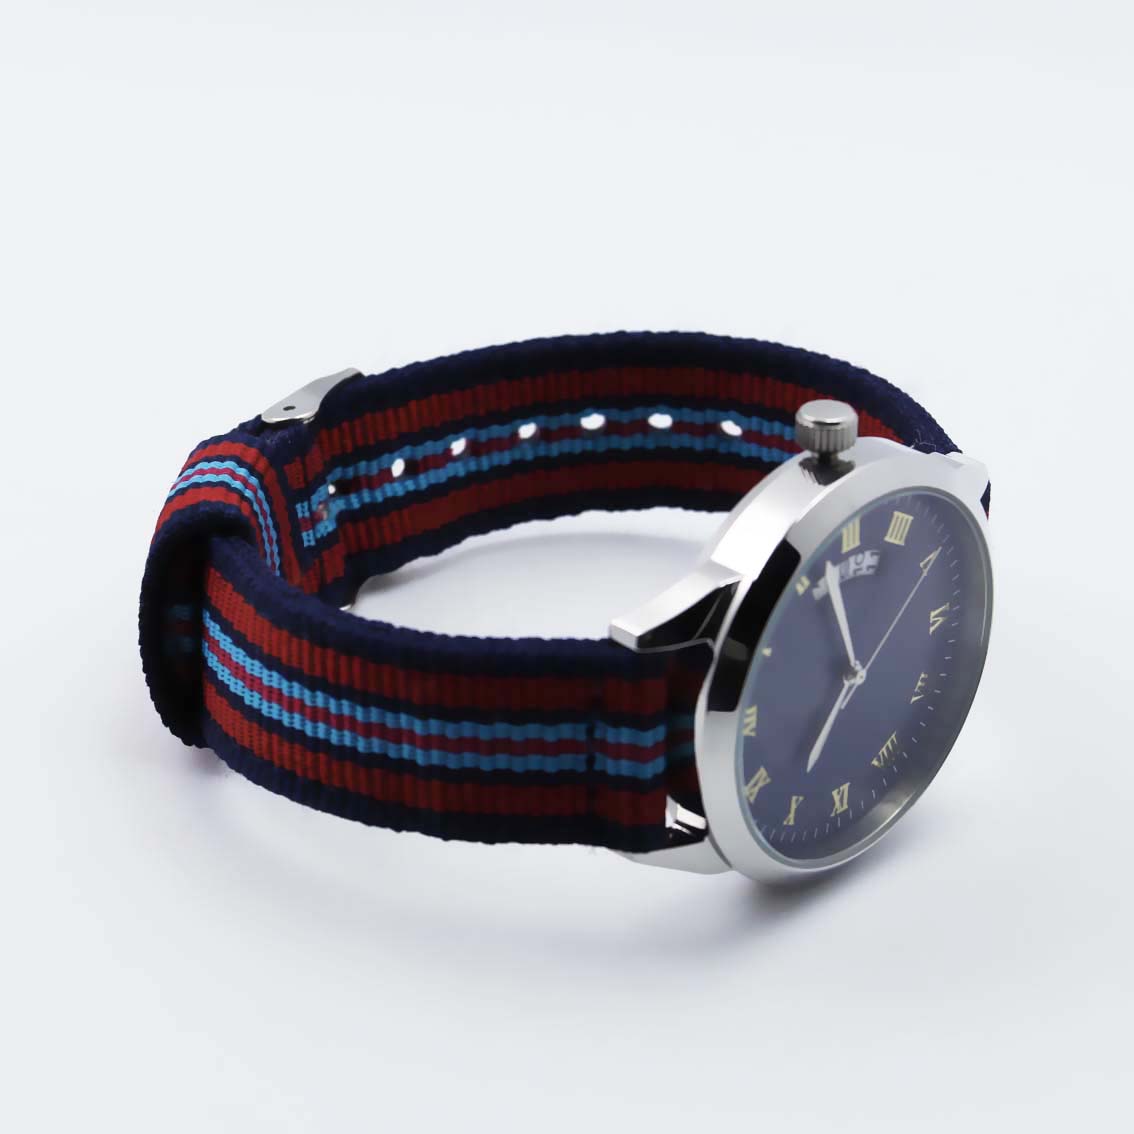 #02013Men's wristwatch quartz analog Nylon strap watch